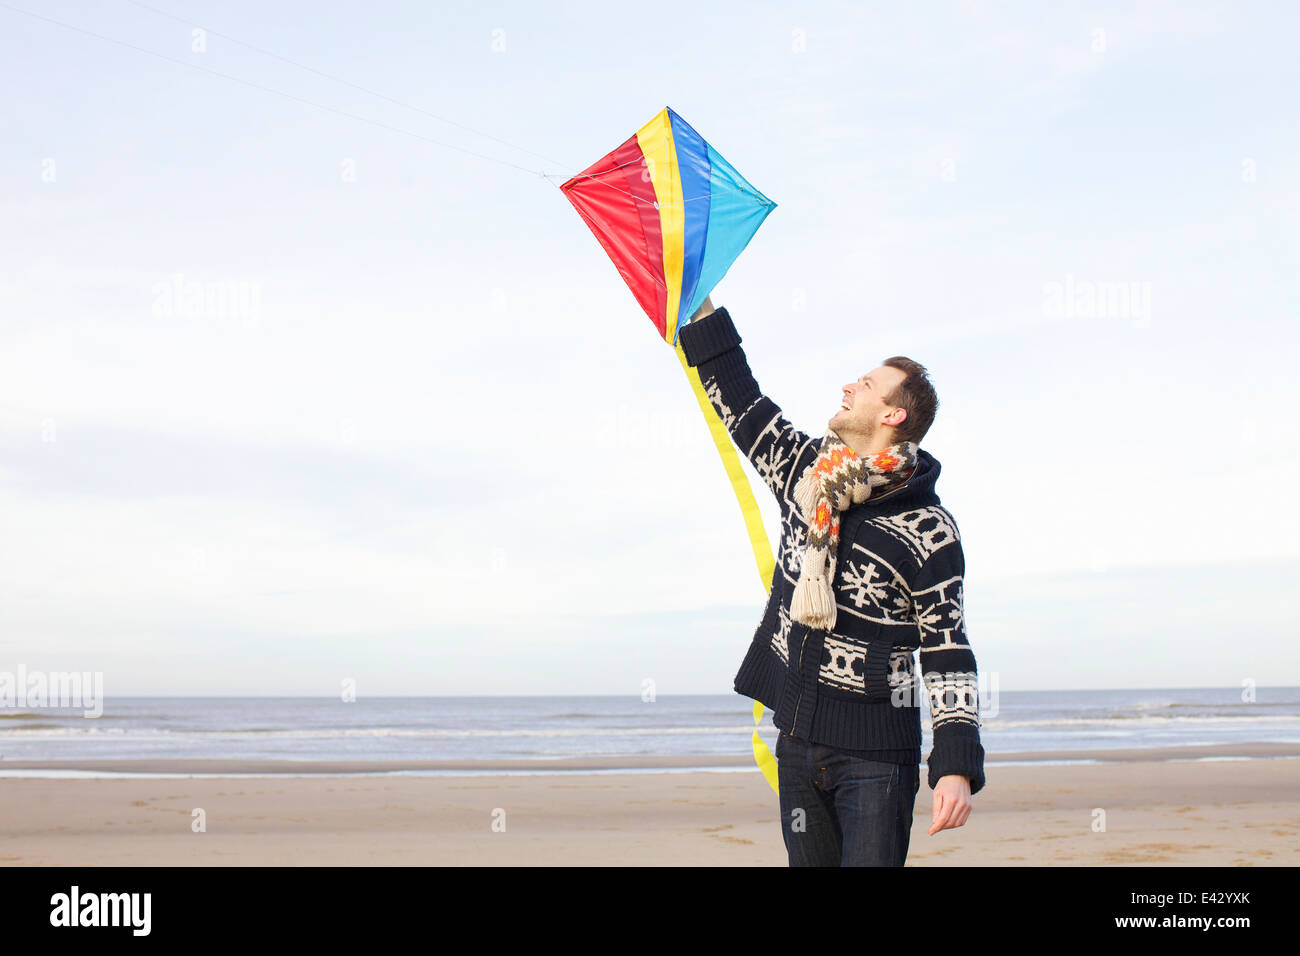 Mid adult man holding up kite on beach, Bloemendaal aan Zee, Netherlands Stock Photo